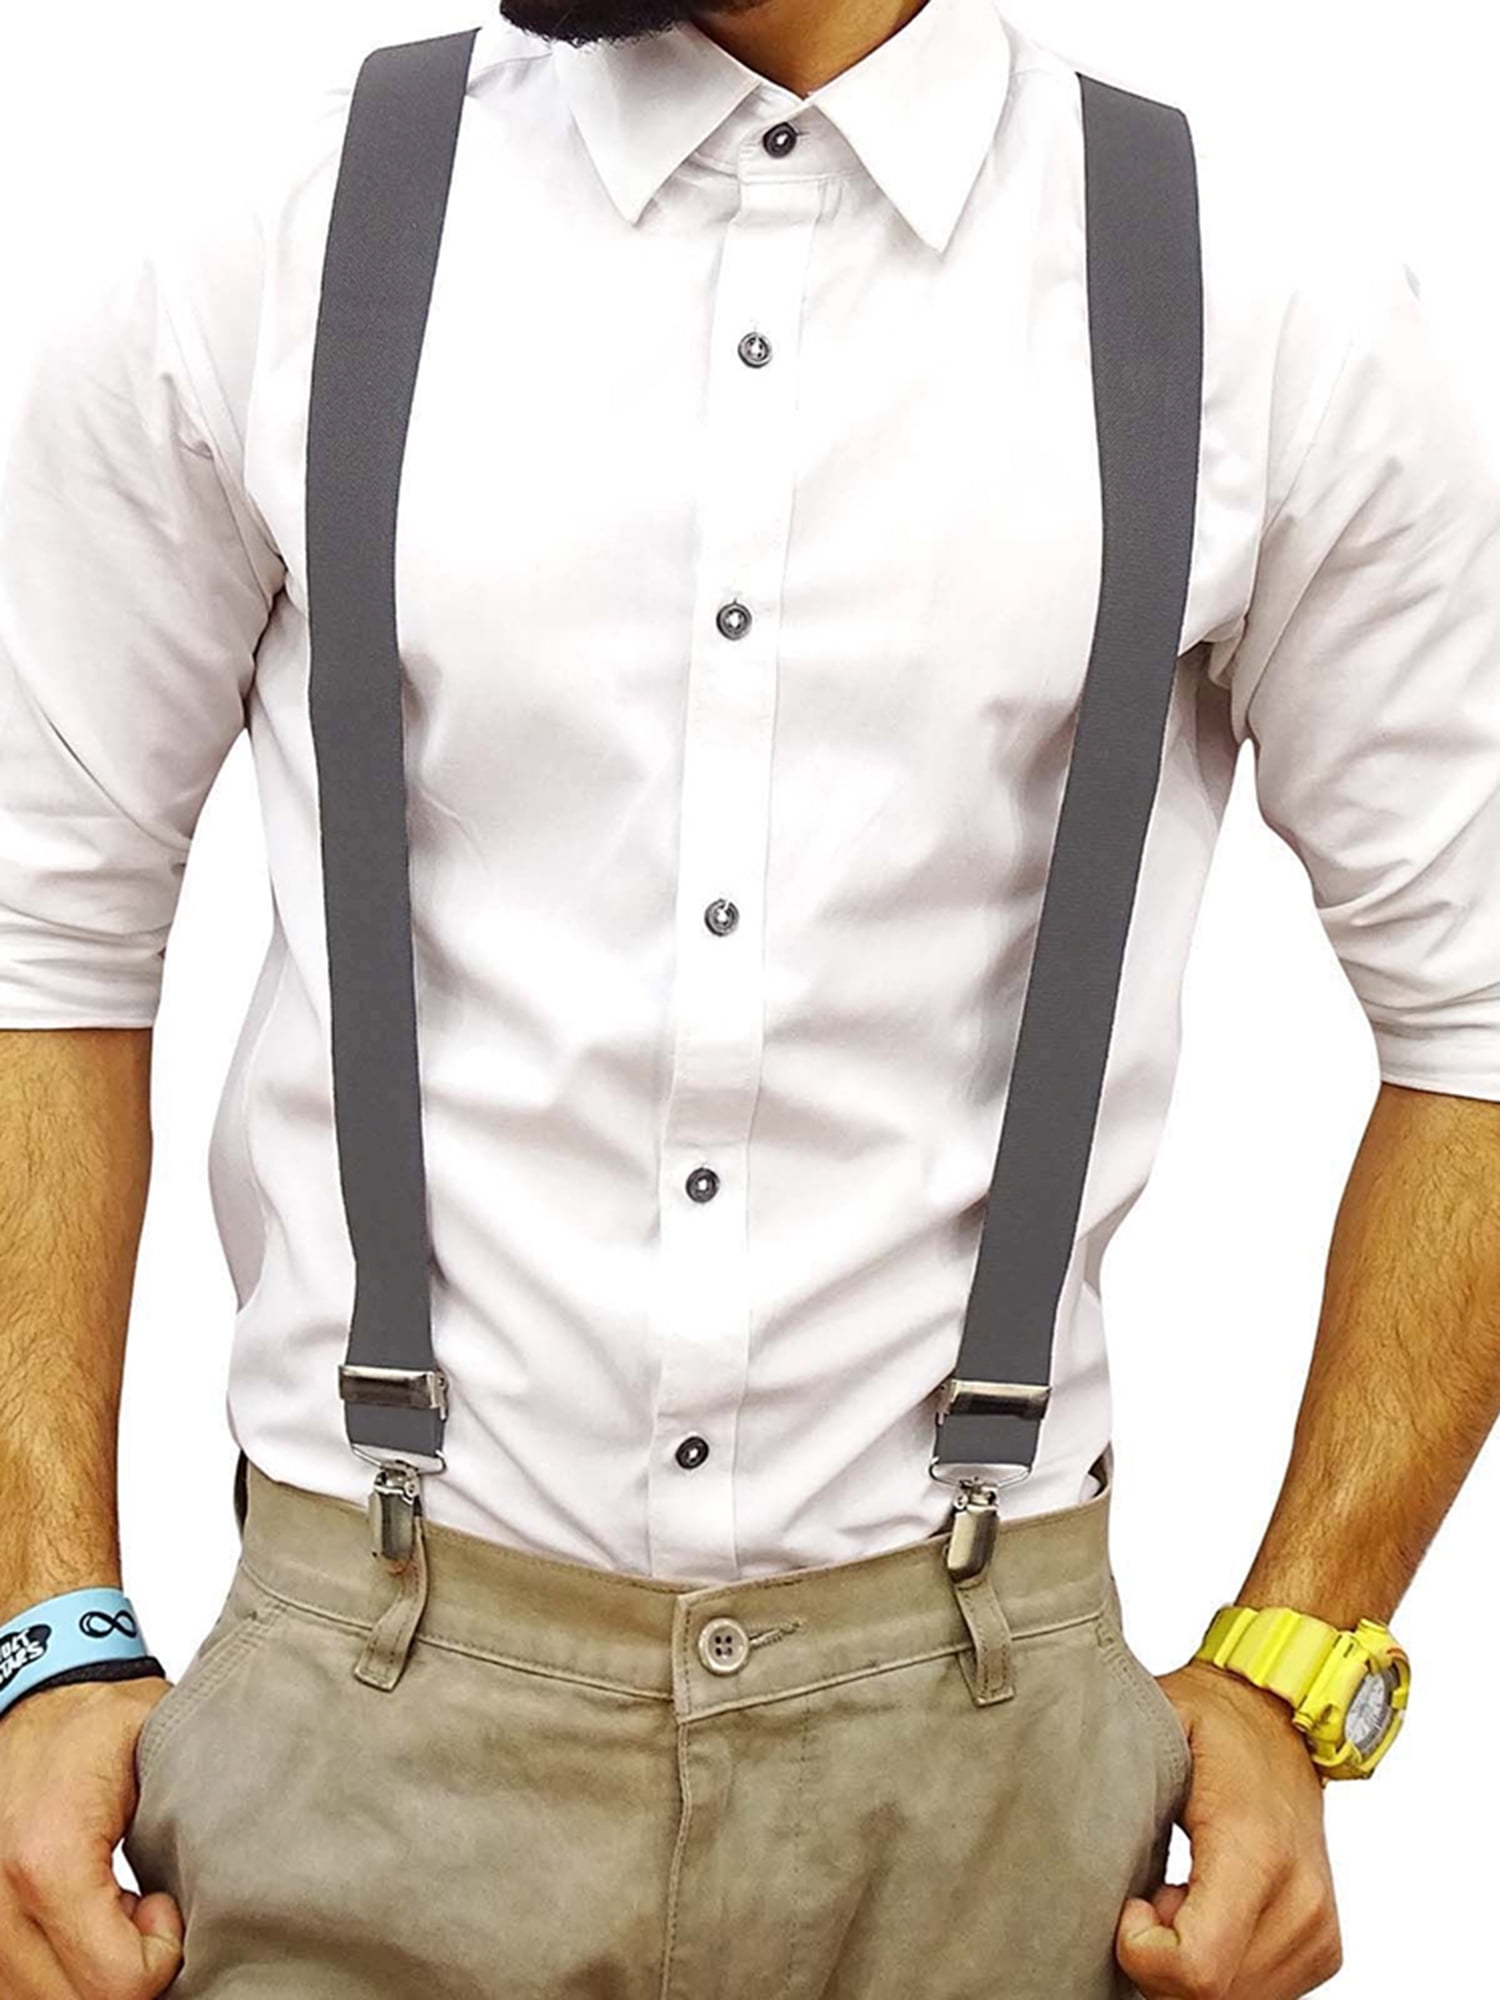 Unisex Red Elasitic Y-back Style Suspenders Clip On Pants Belt Braces Adjustable